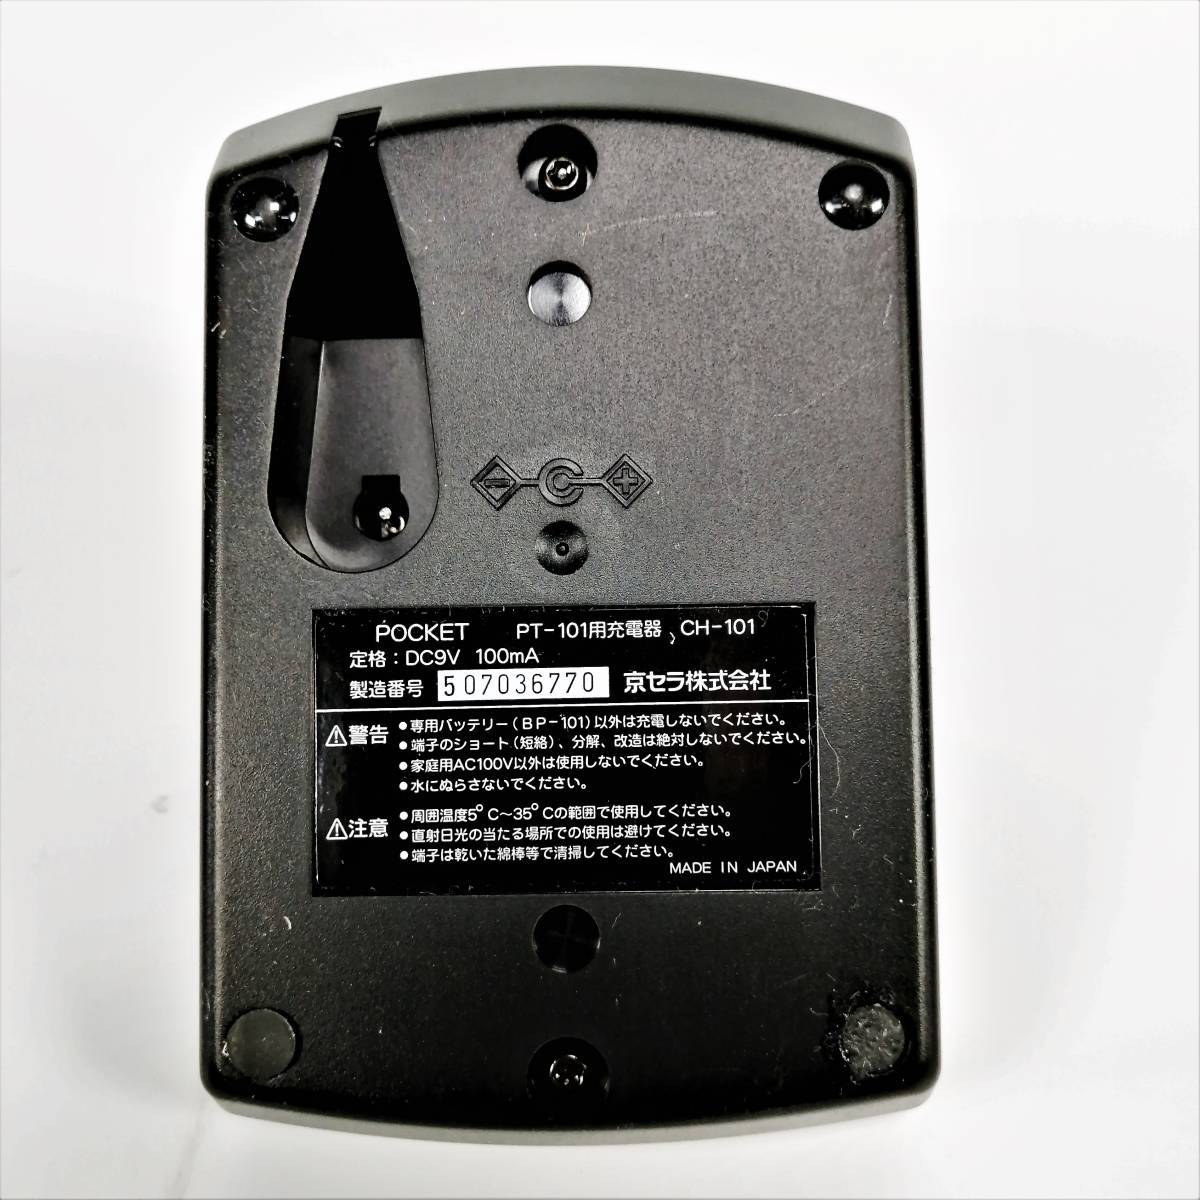  Kyocera POCKET PT-101 first generation DDI pocket PHS black transceiver function with charger .1995 year made KYOCERA [USED goods ] 22 00887